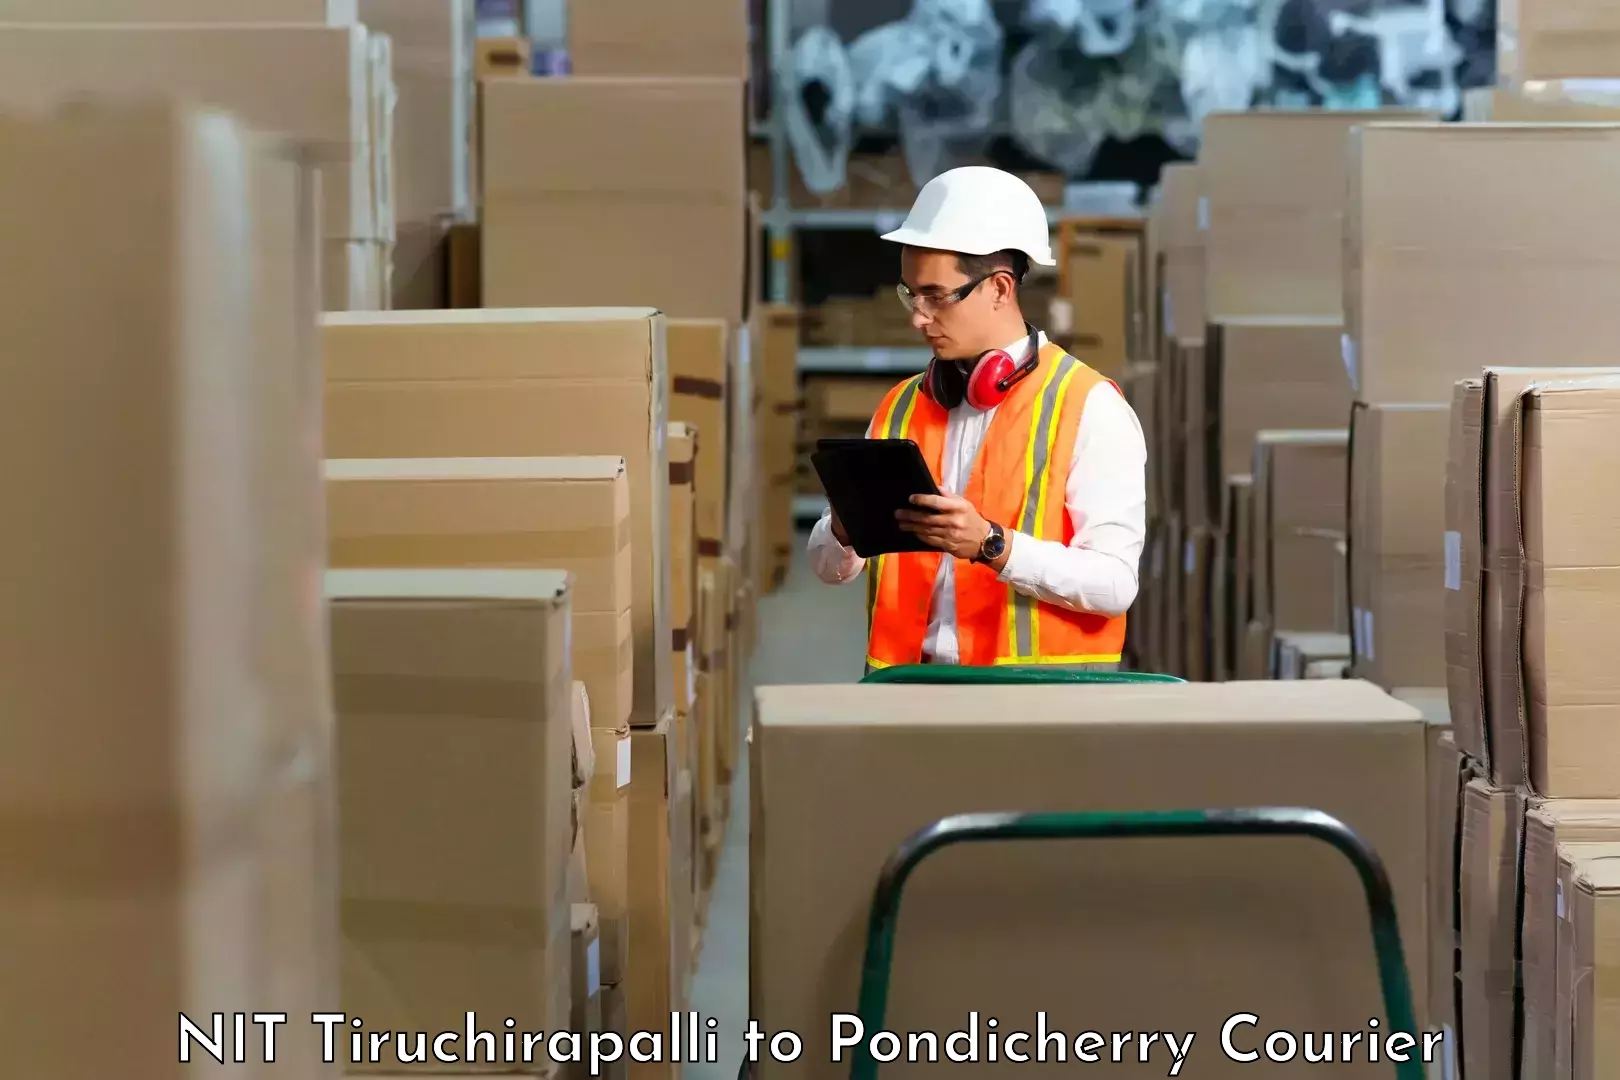 Courier service partnerships NIT Tiruchirapalli to Pondicherry